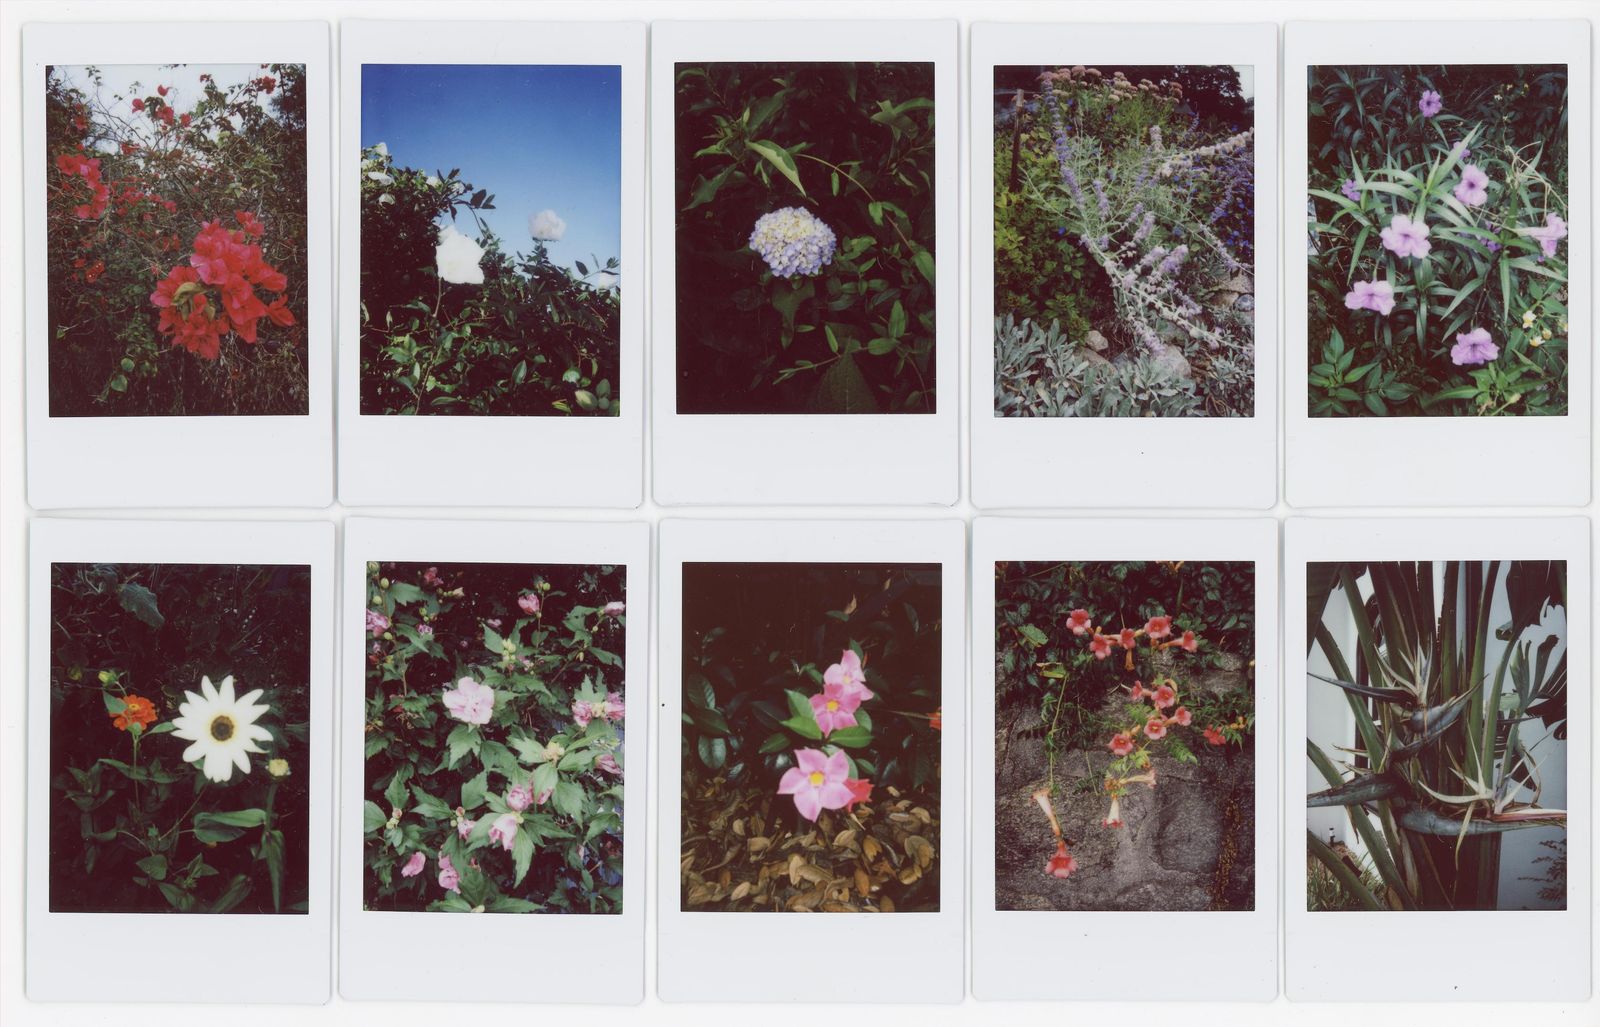 © RACHEL TREIDE - "A Minute Fraction of All the Flowers I've Ever Seen," photographs 11-20